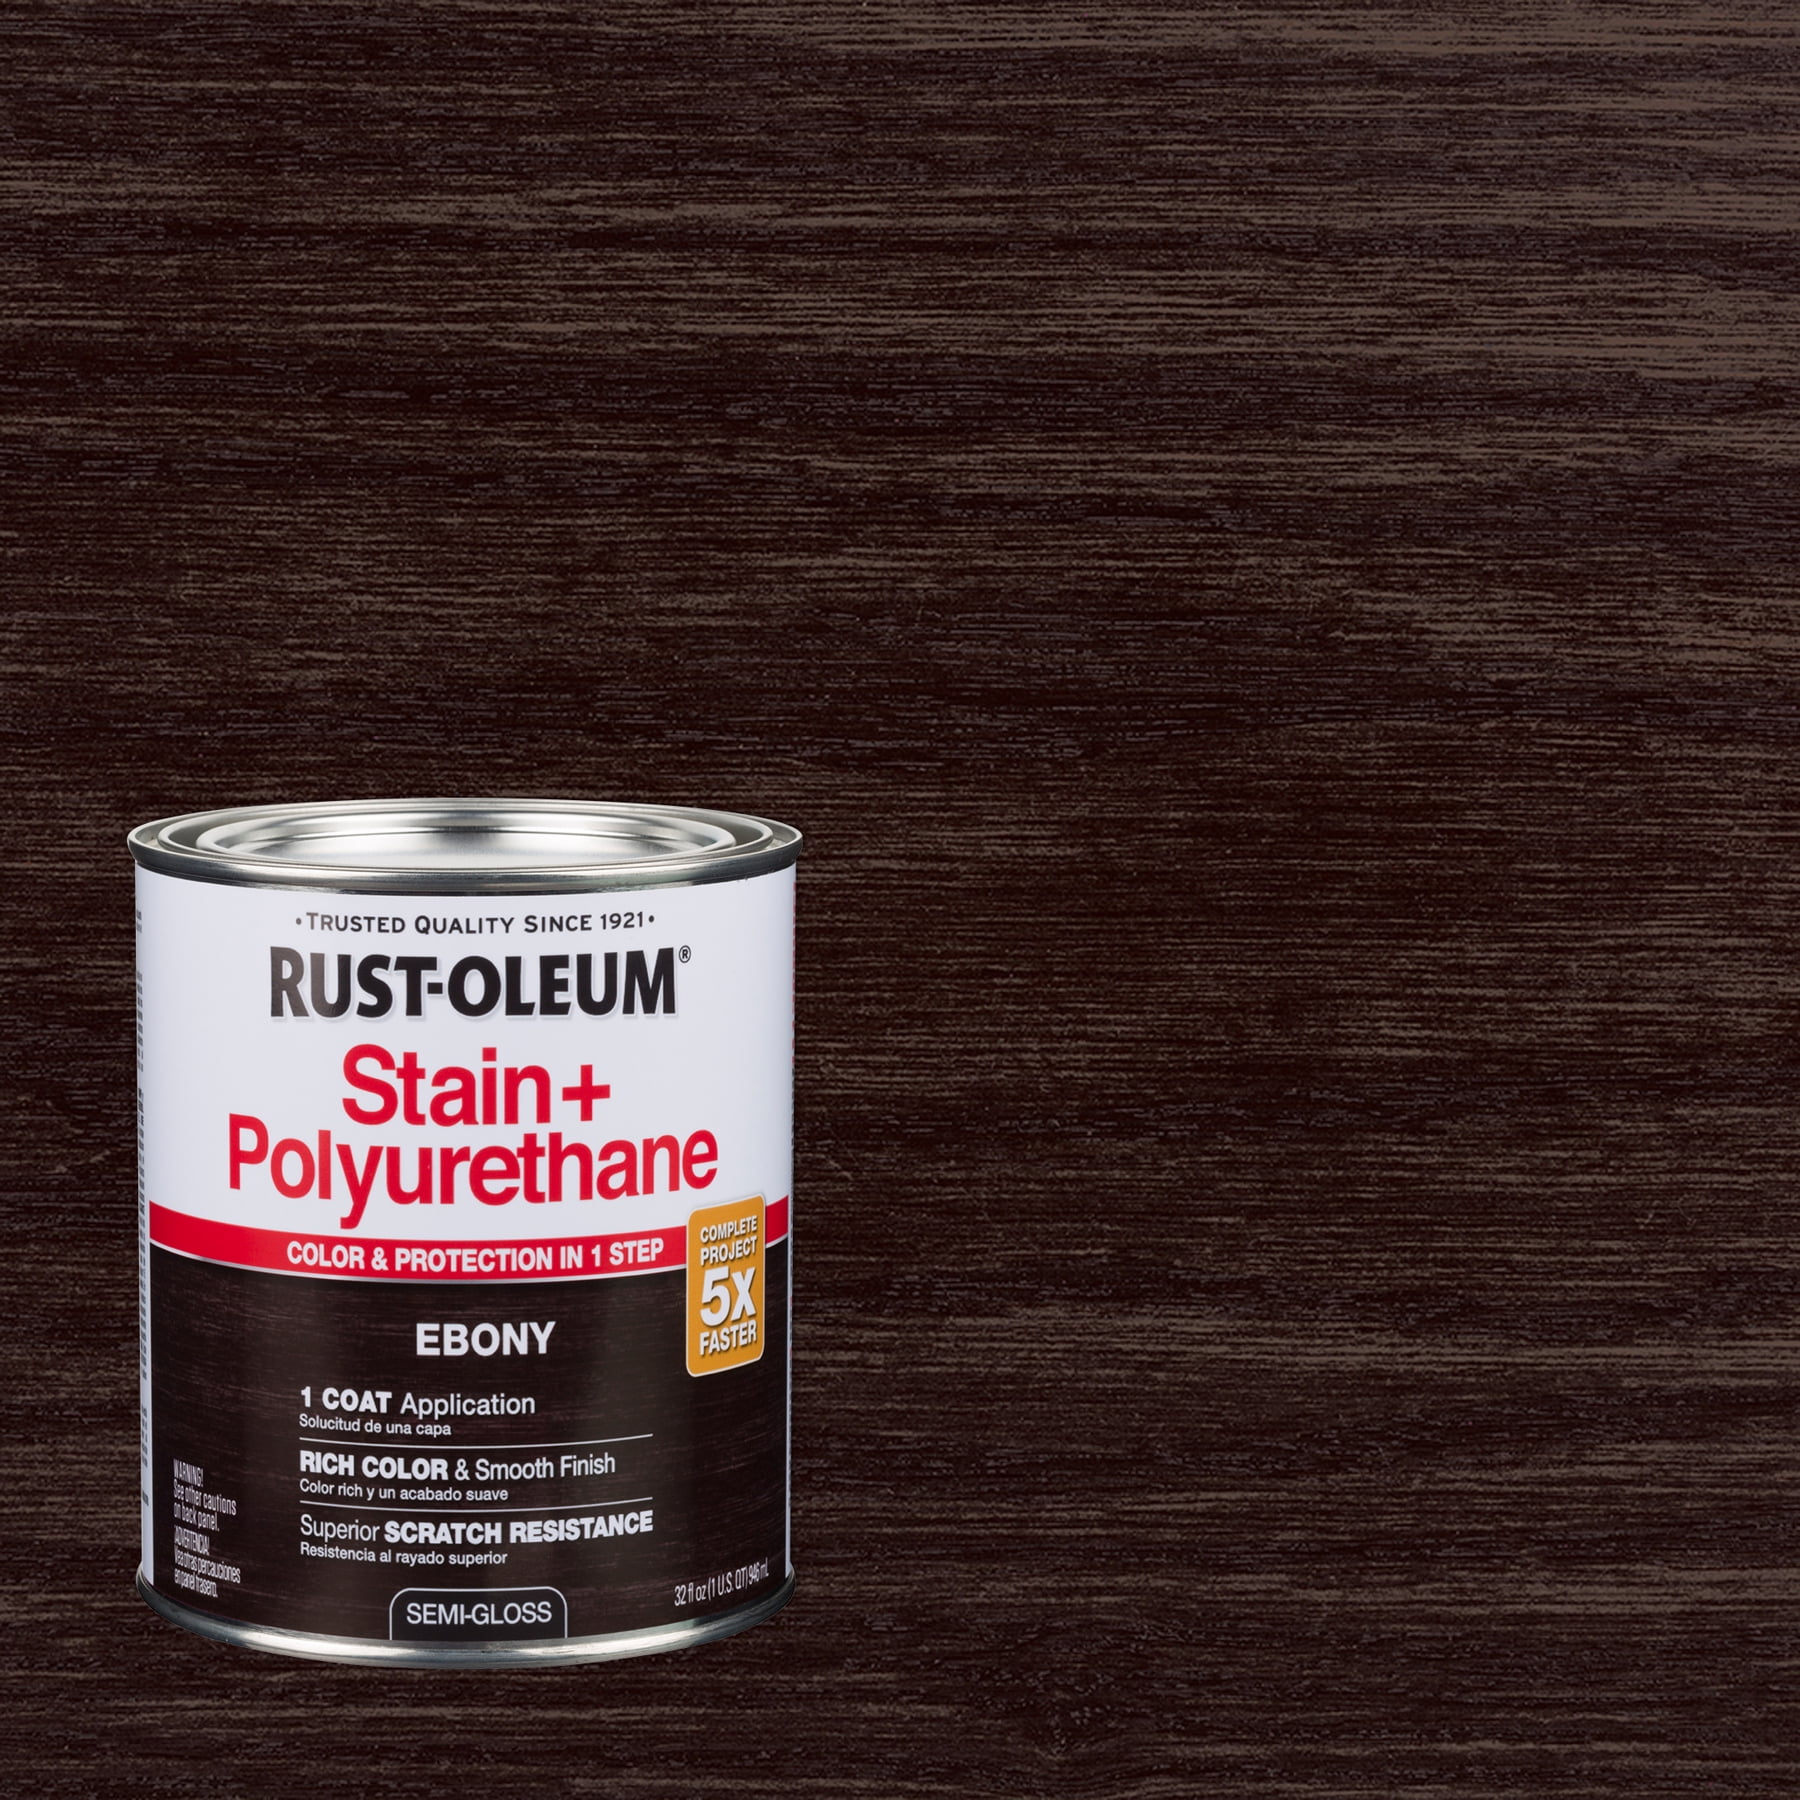 Ebony, Rust-Oleum Stain + Polyurethane Semi-Gloss -330053, Quart